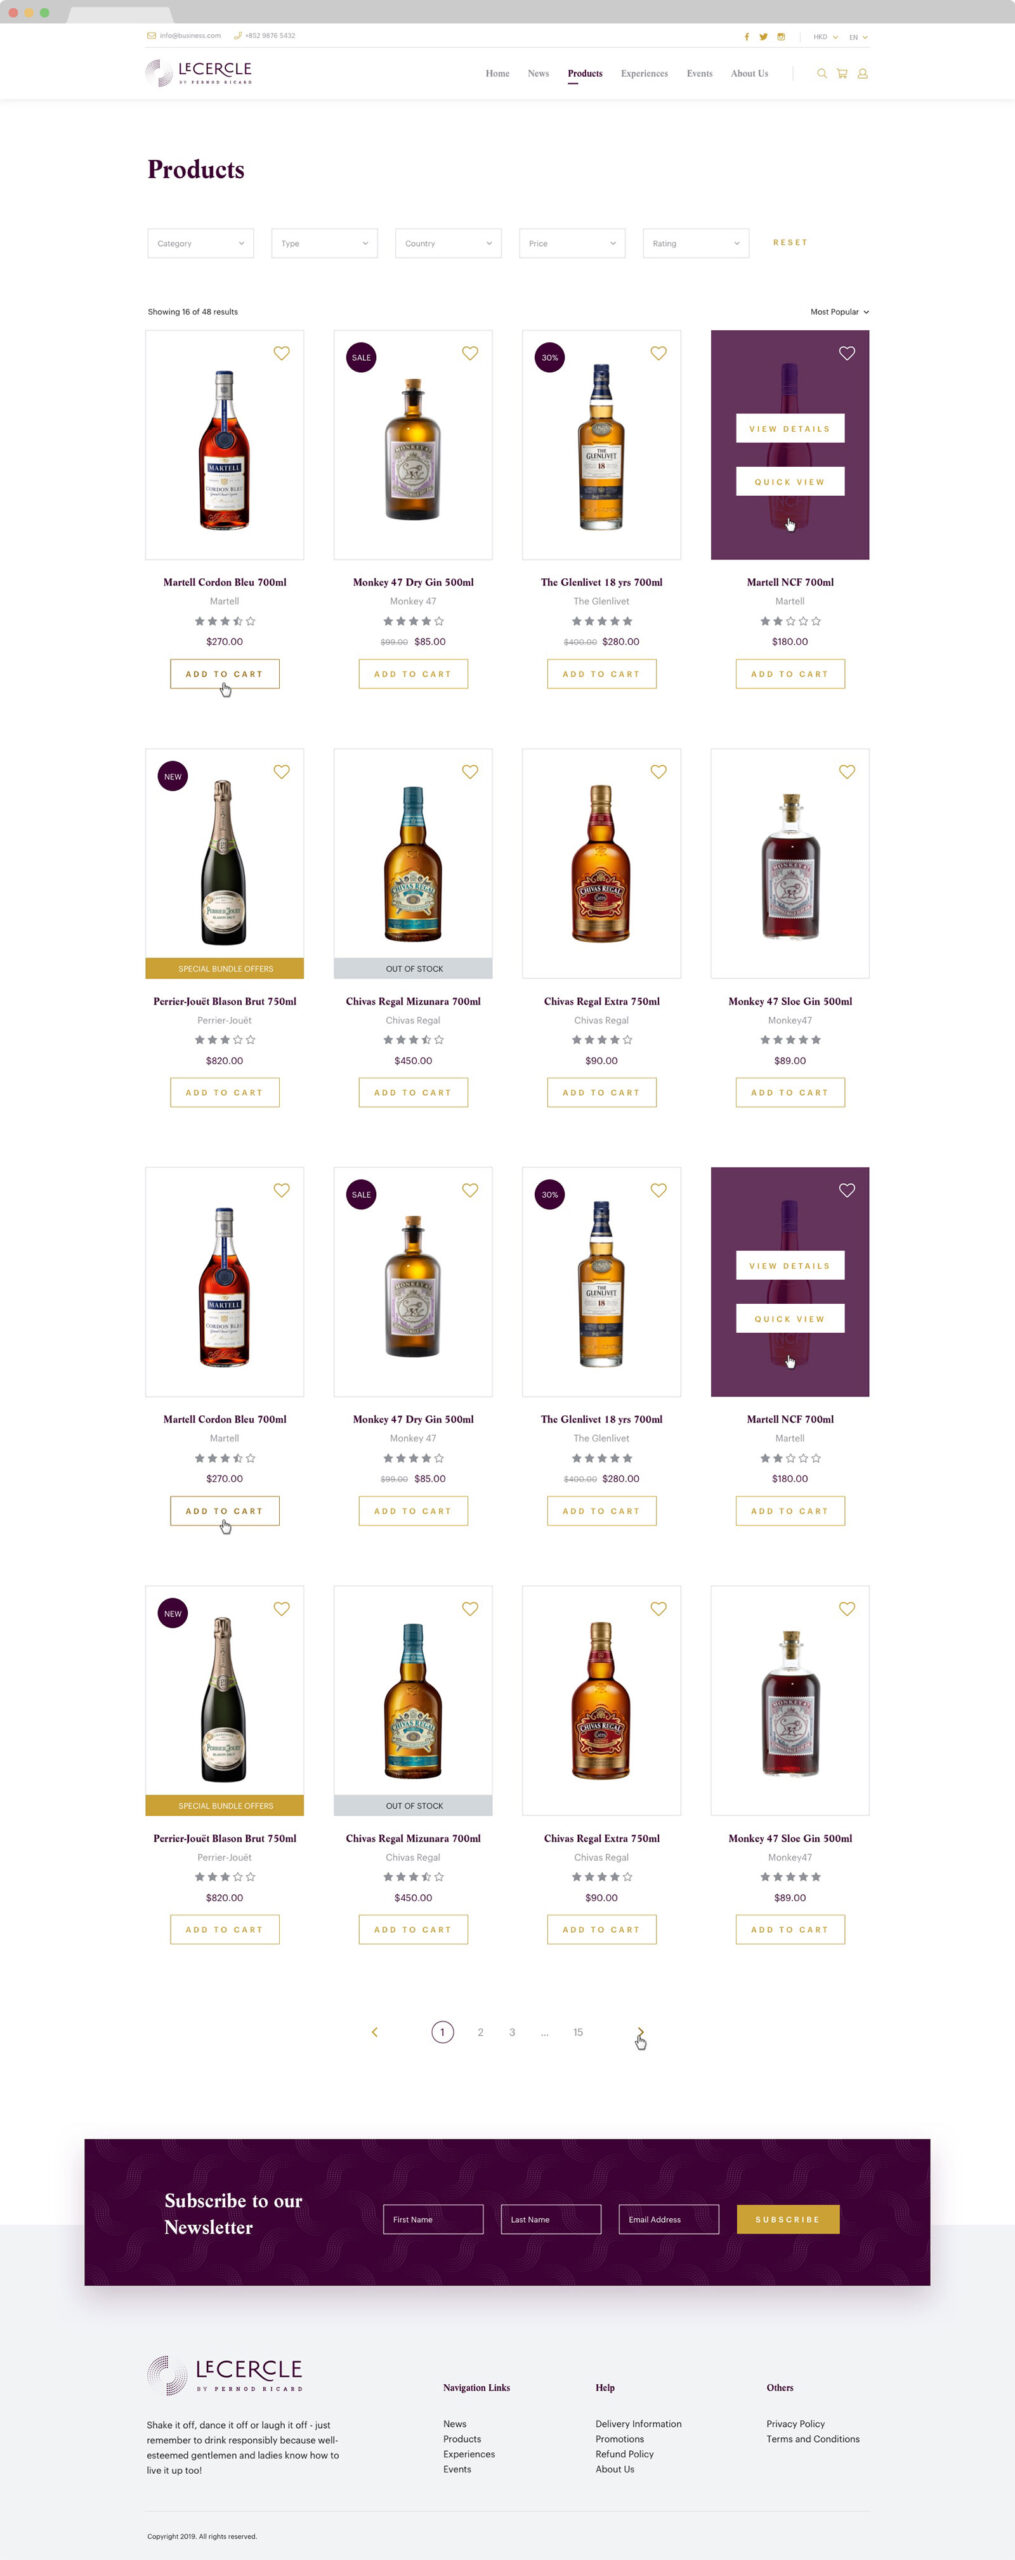 e commerce singapore pernod ricard 02 scaled - Pernod Ricard